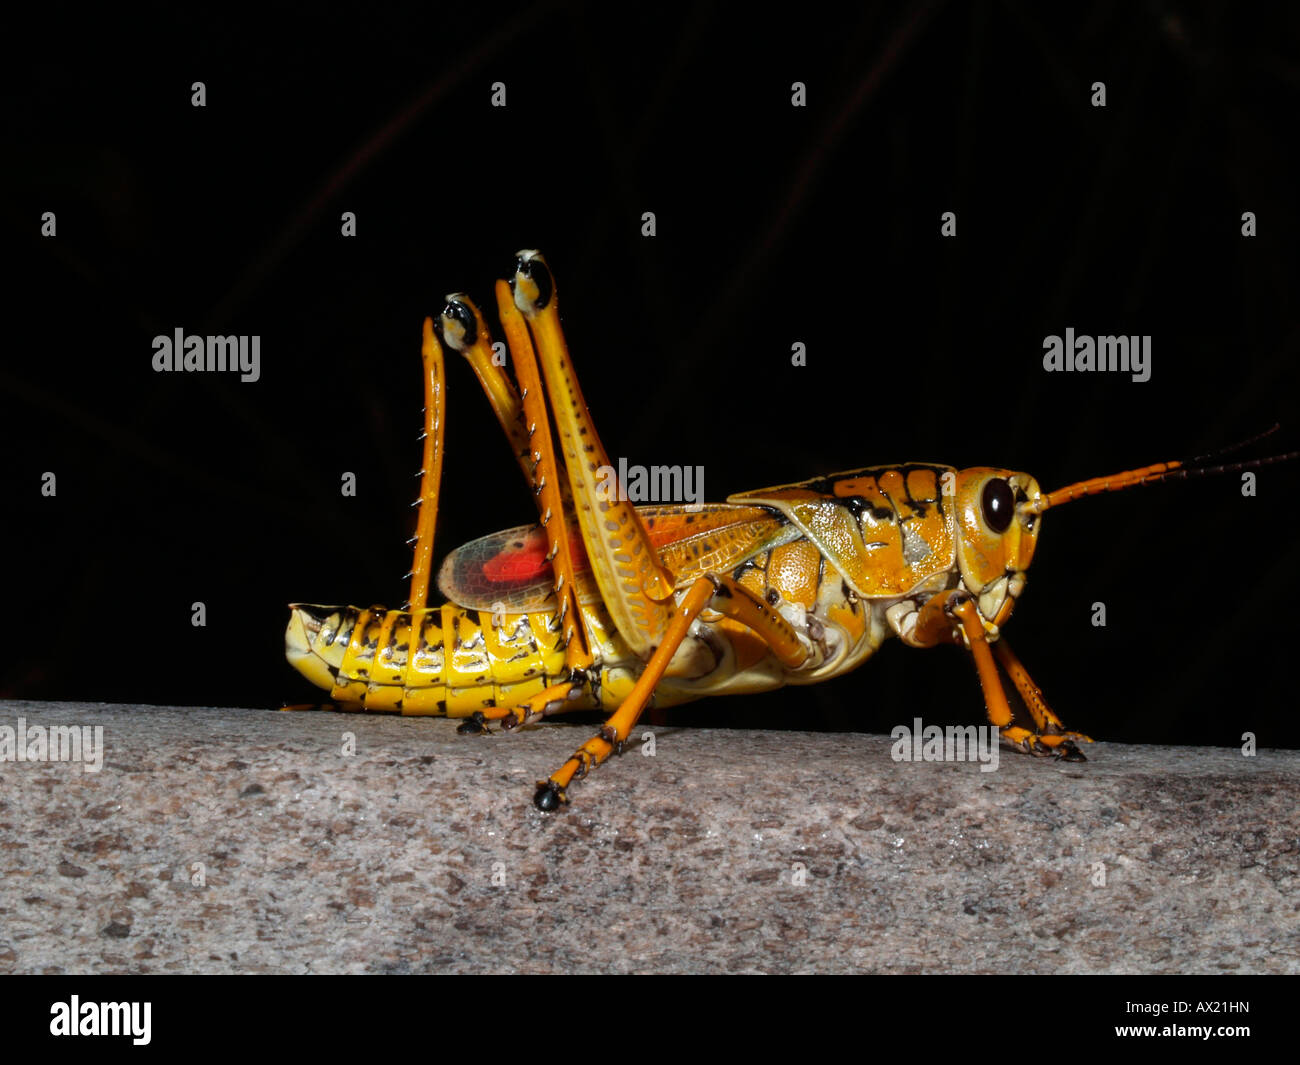 Eastern lubber grasshopper (Romalea guttata) Stock Photo